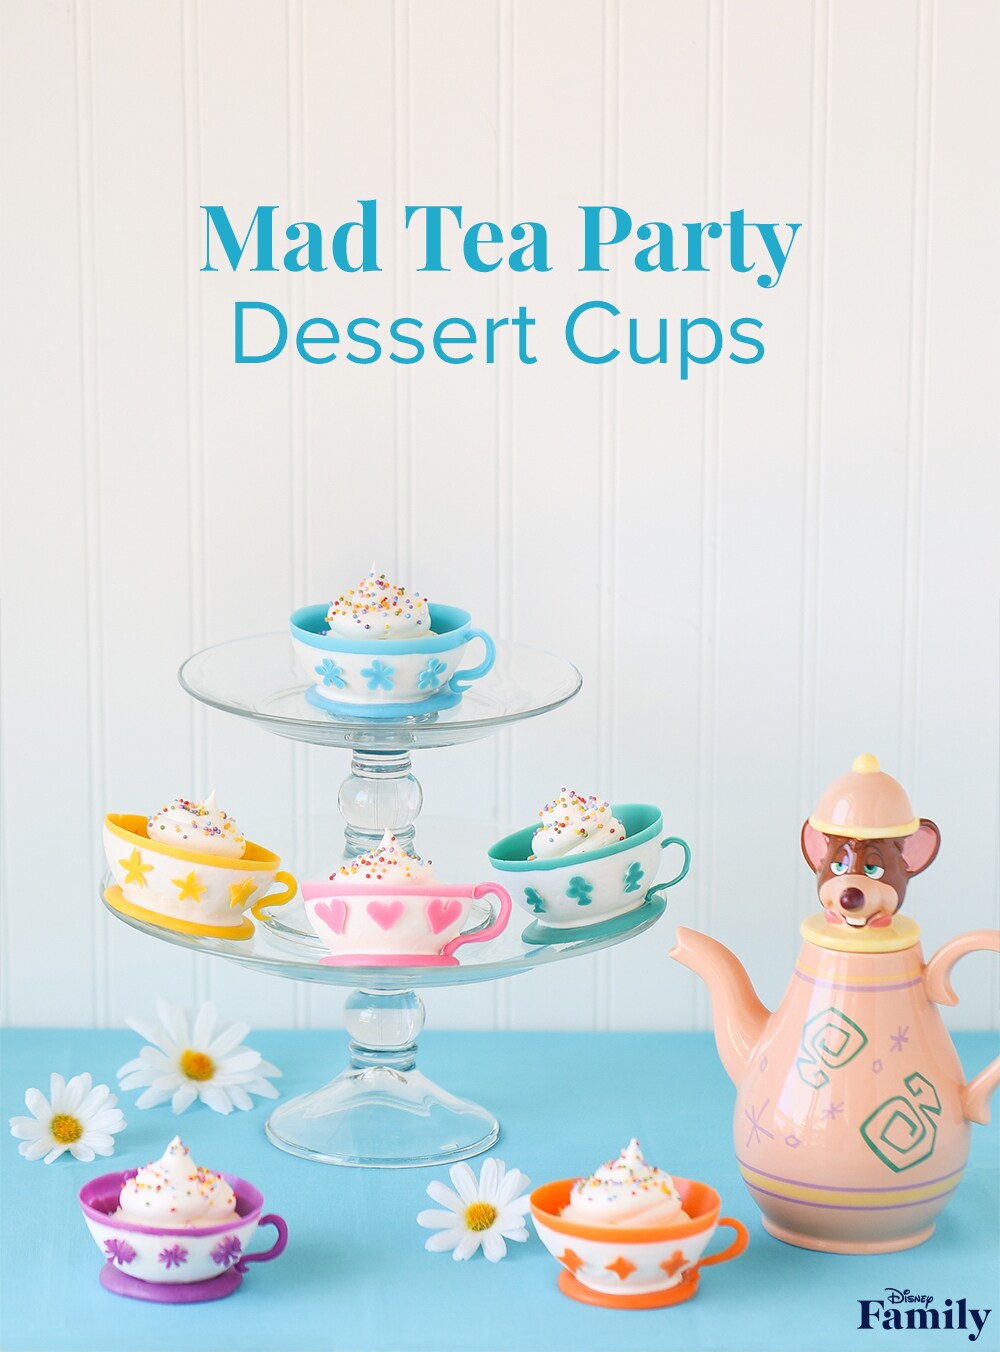 "Mad Tea Party Dessert Cups".